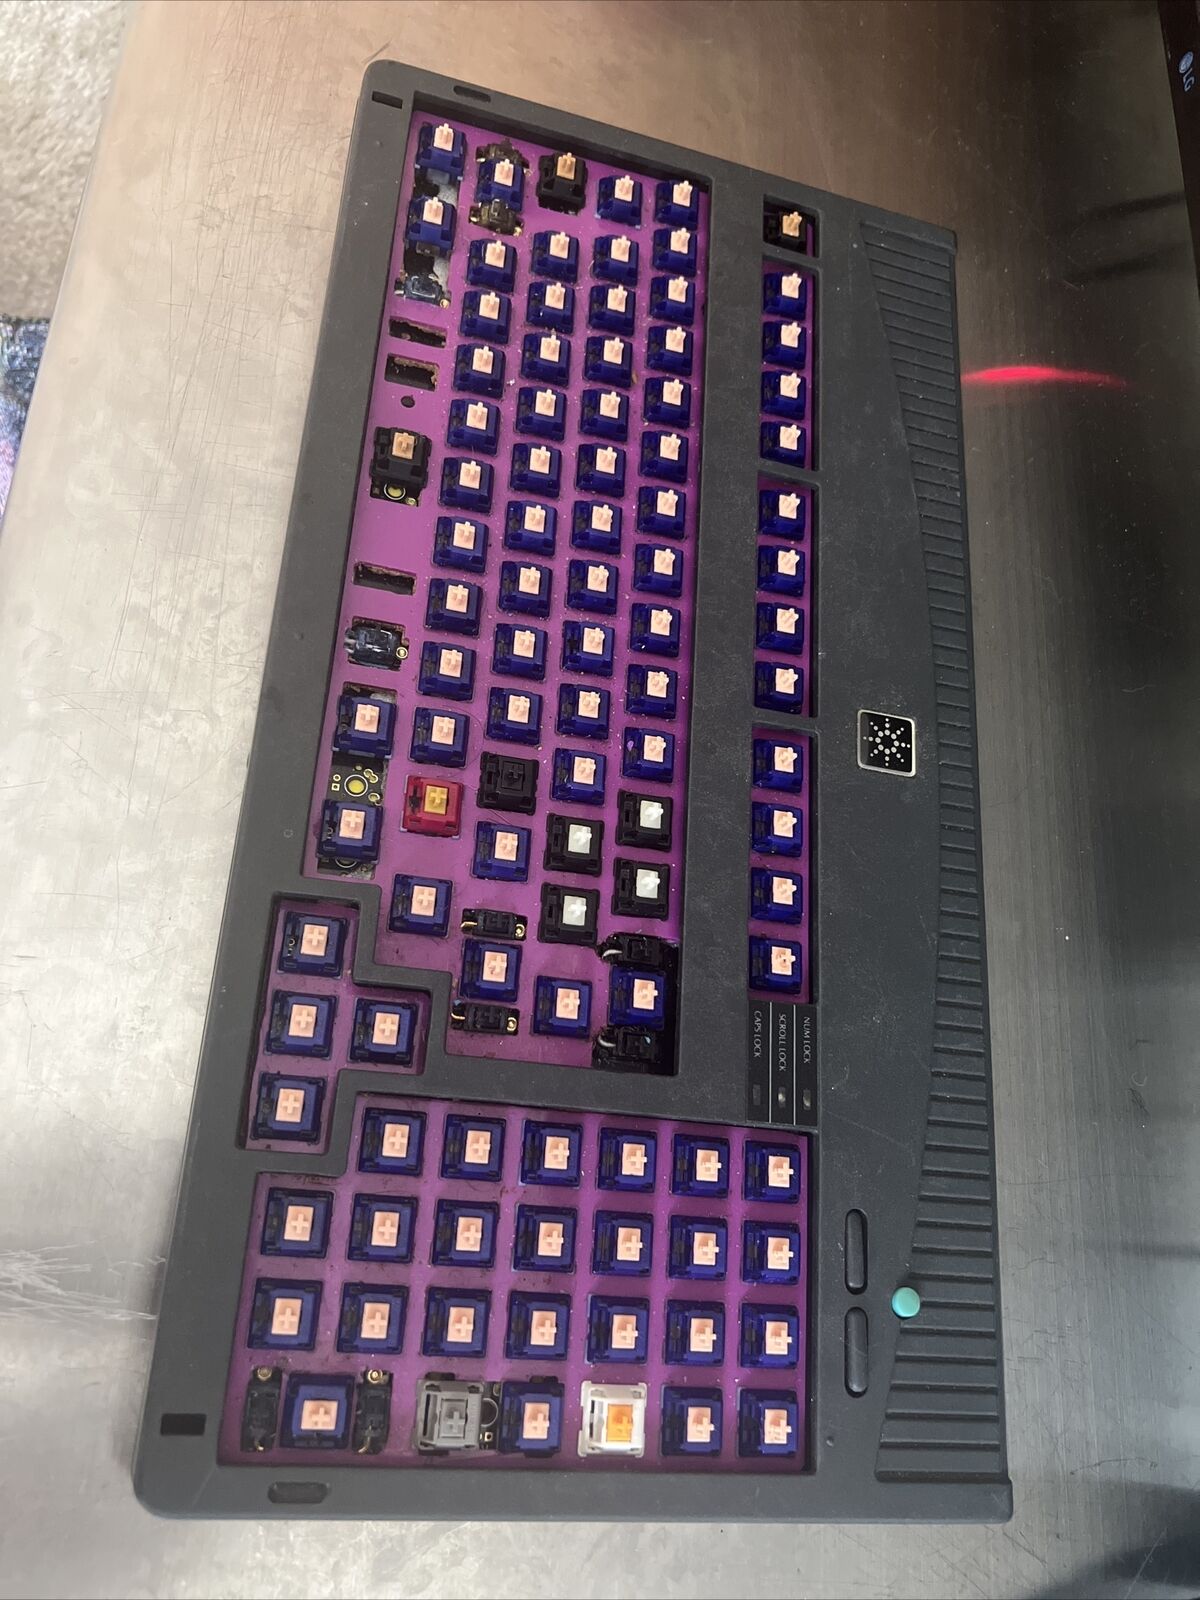 Dolch PAC Keyboard